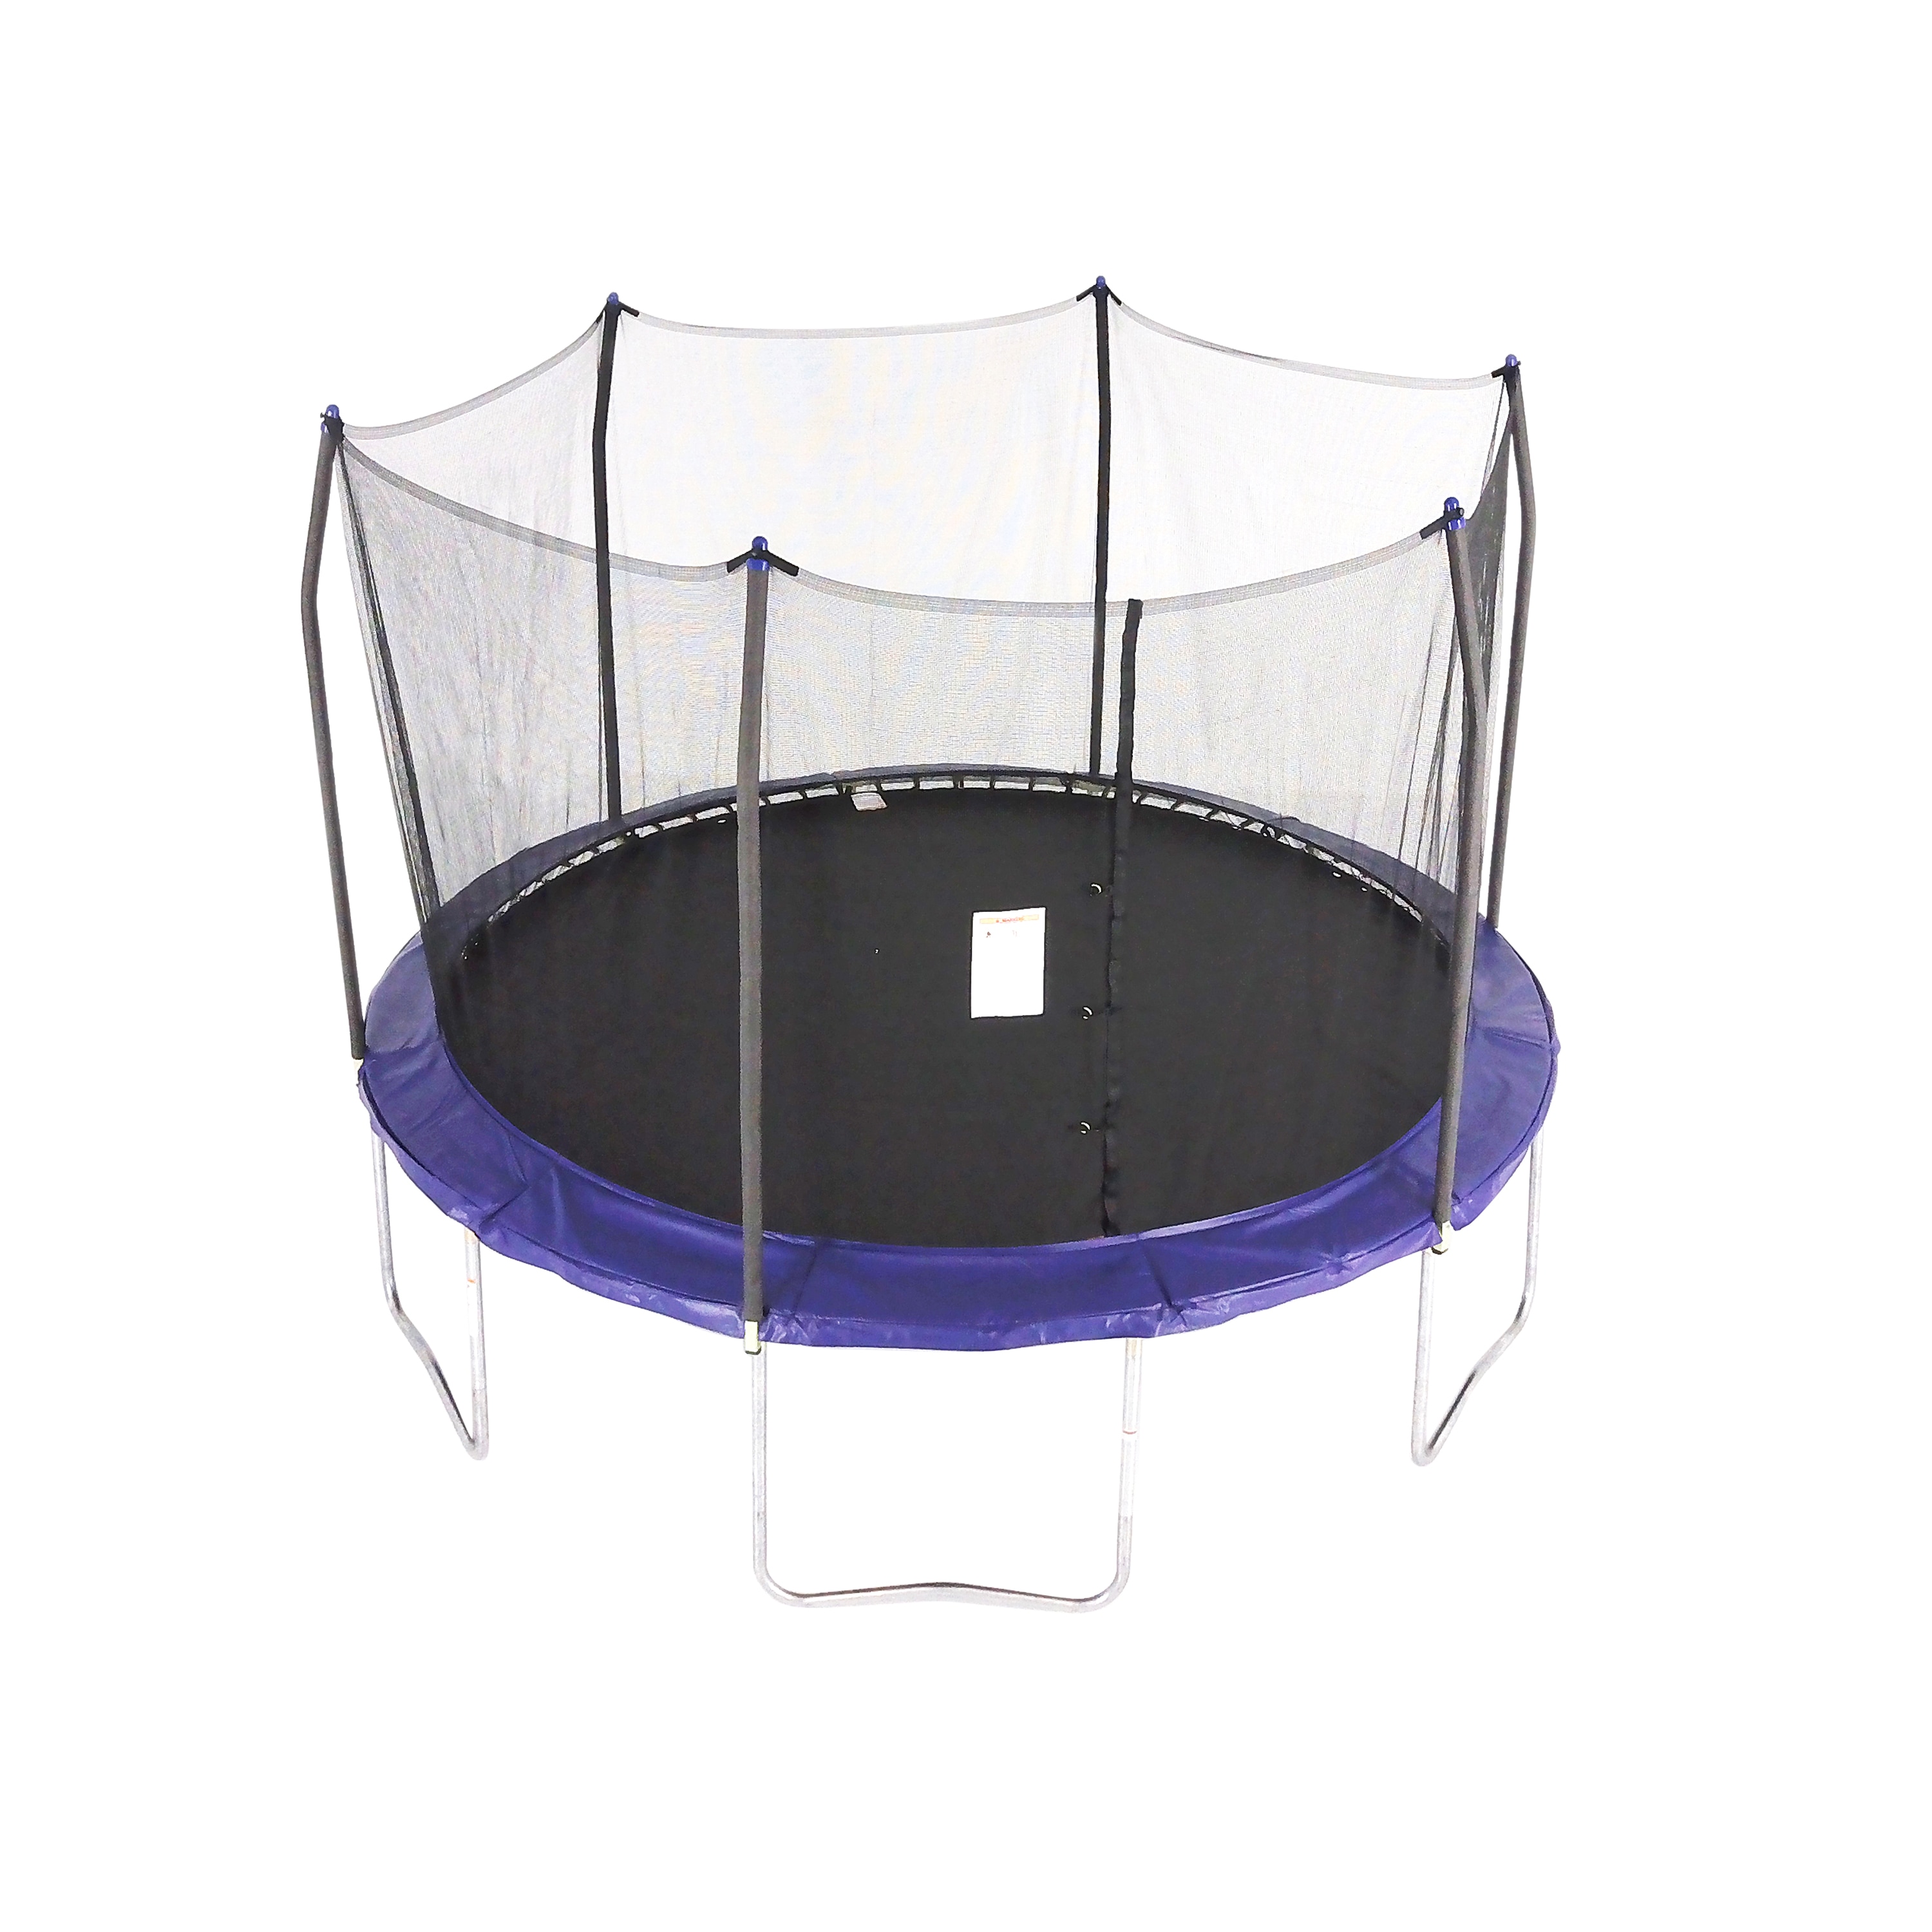 Trampoline With Safety Net Enclosure Blue 12 ft Round Ladder and Frame Safe 